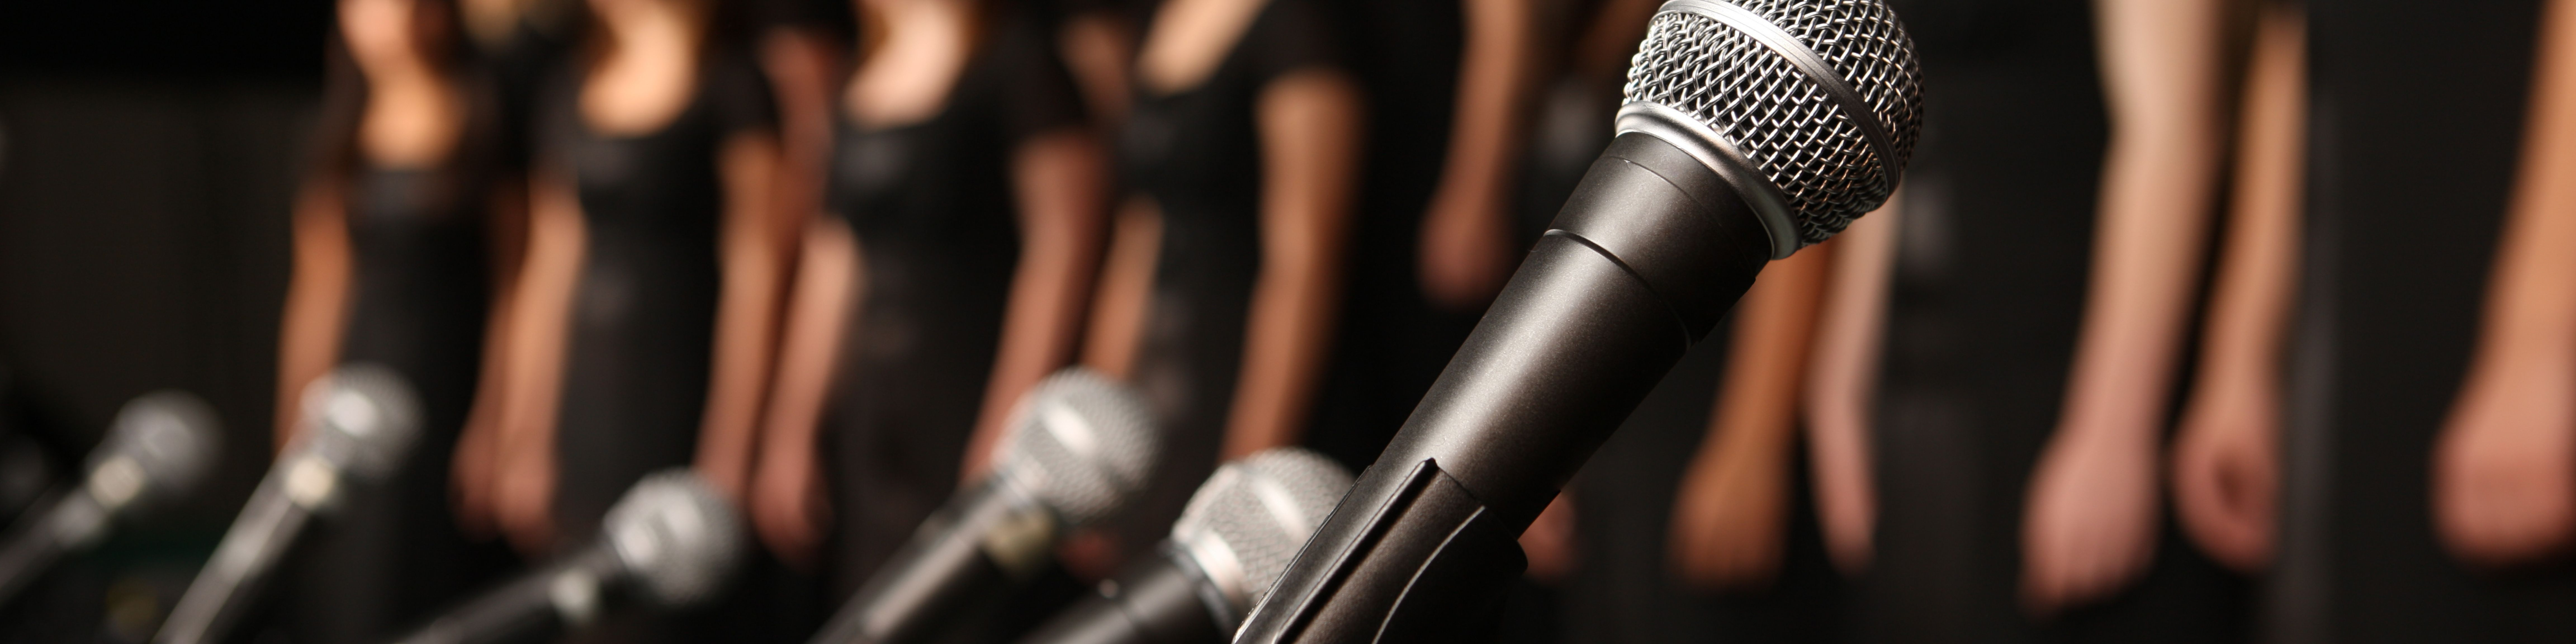 row of choir microphones photograph